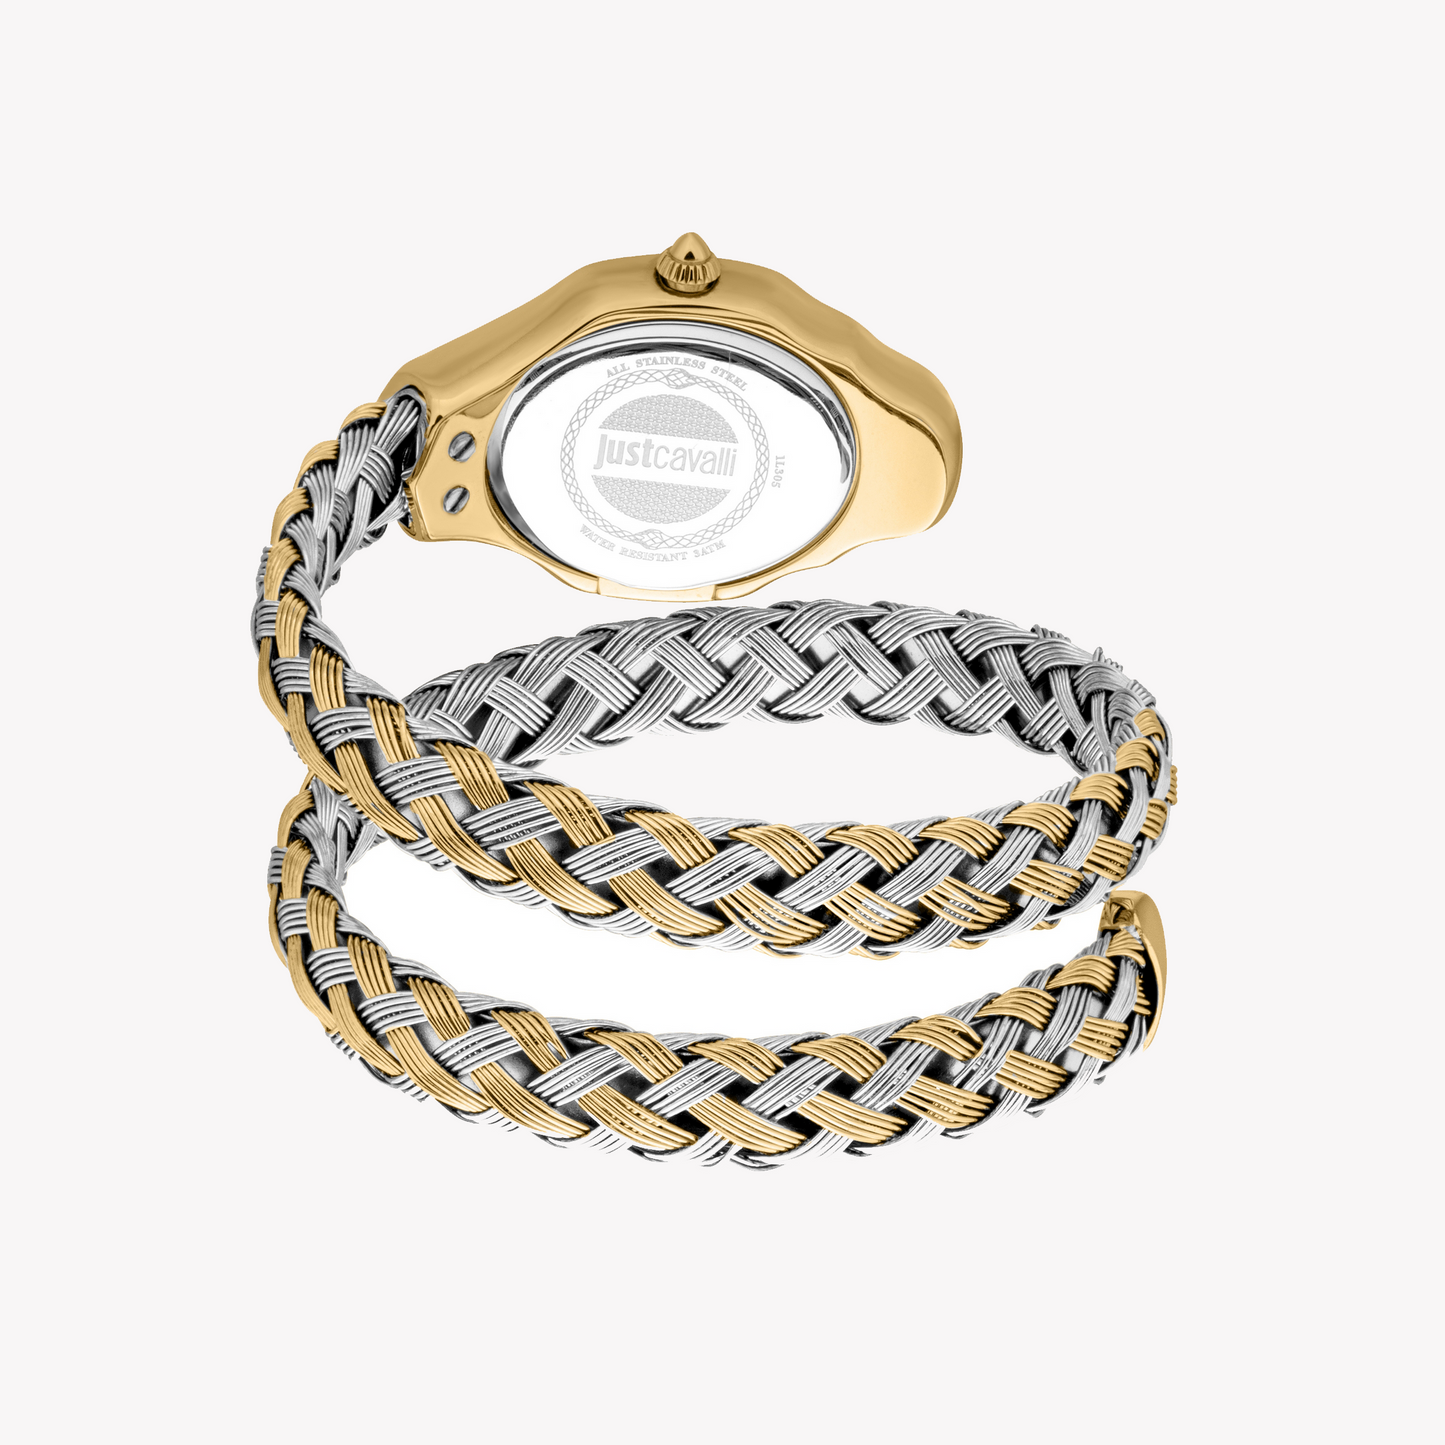 Just Cavalli Gold Stainless Steel Women's Watch